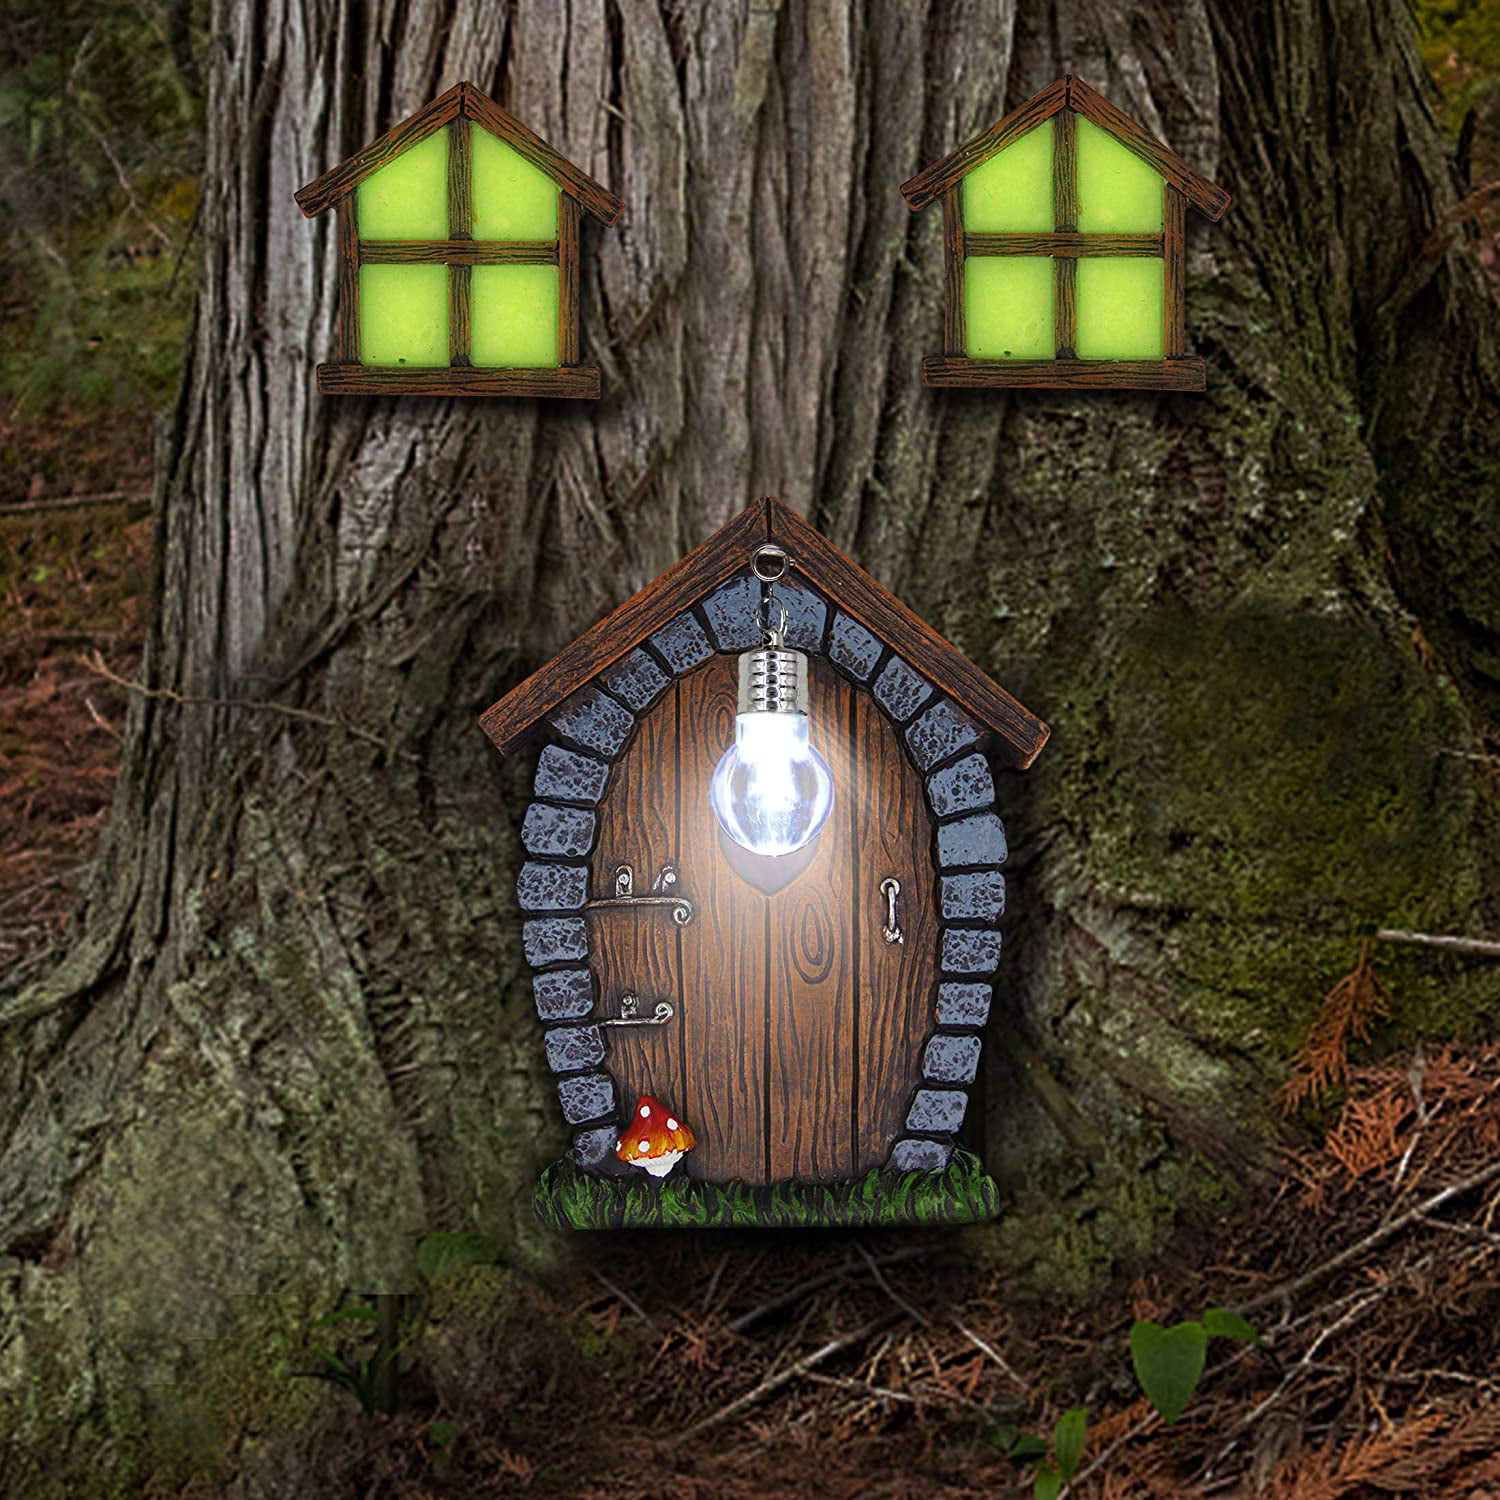 A Fairy Gnome Home Miniature Window and Door for Trees Decoration Tree Hugger Yard Lawn Ornament Art Decor Glow in Dark Fairies Sleeping Door and Windows 